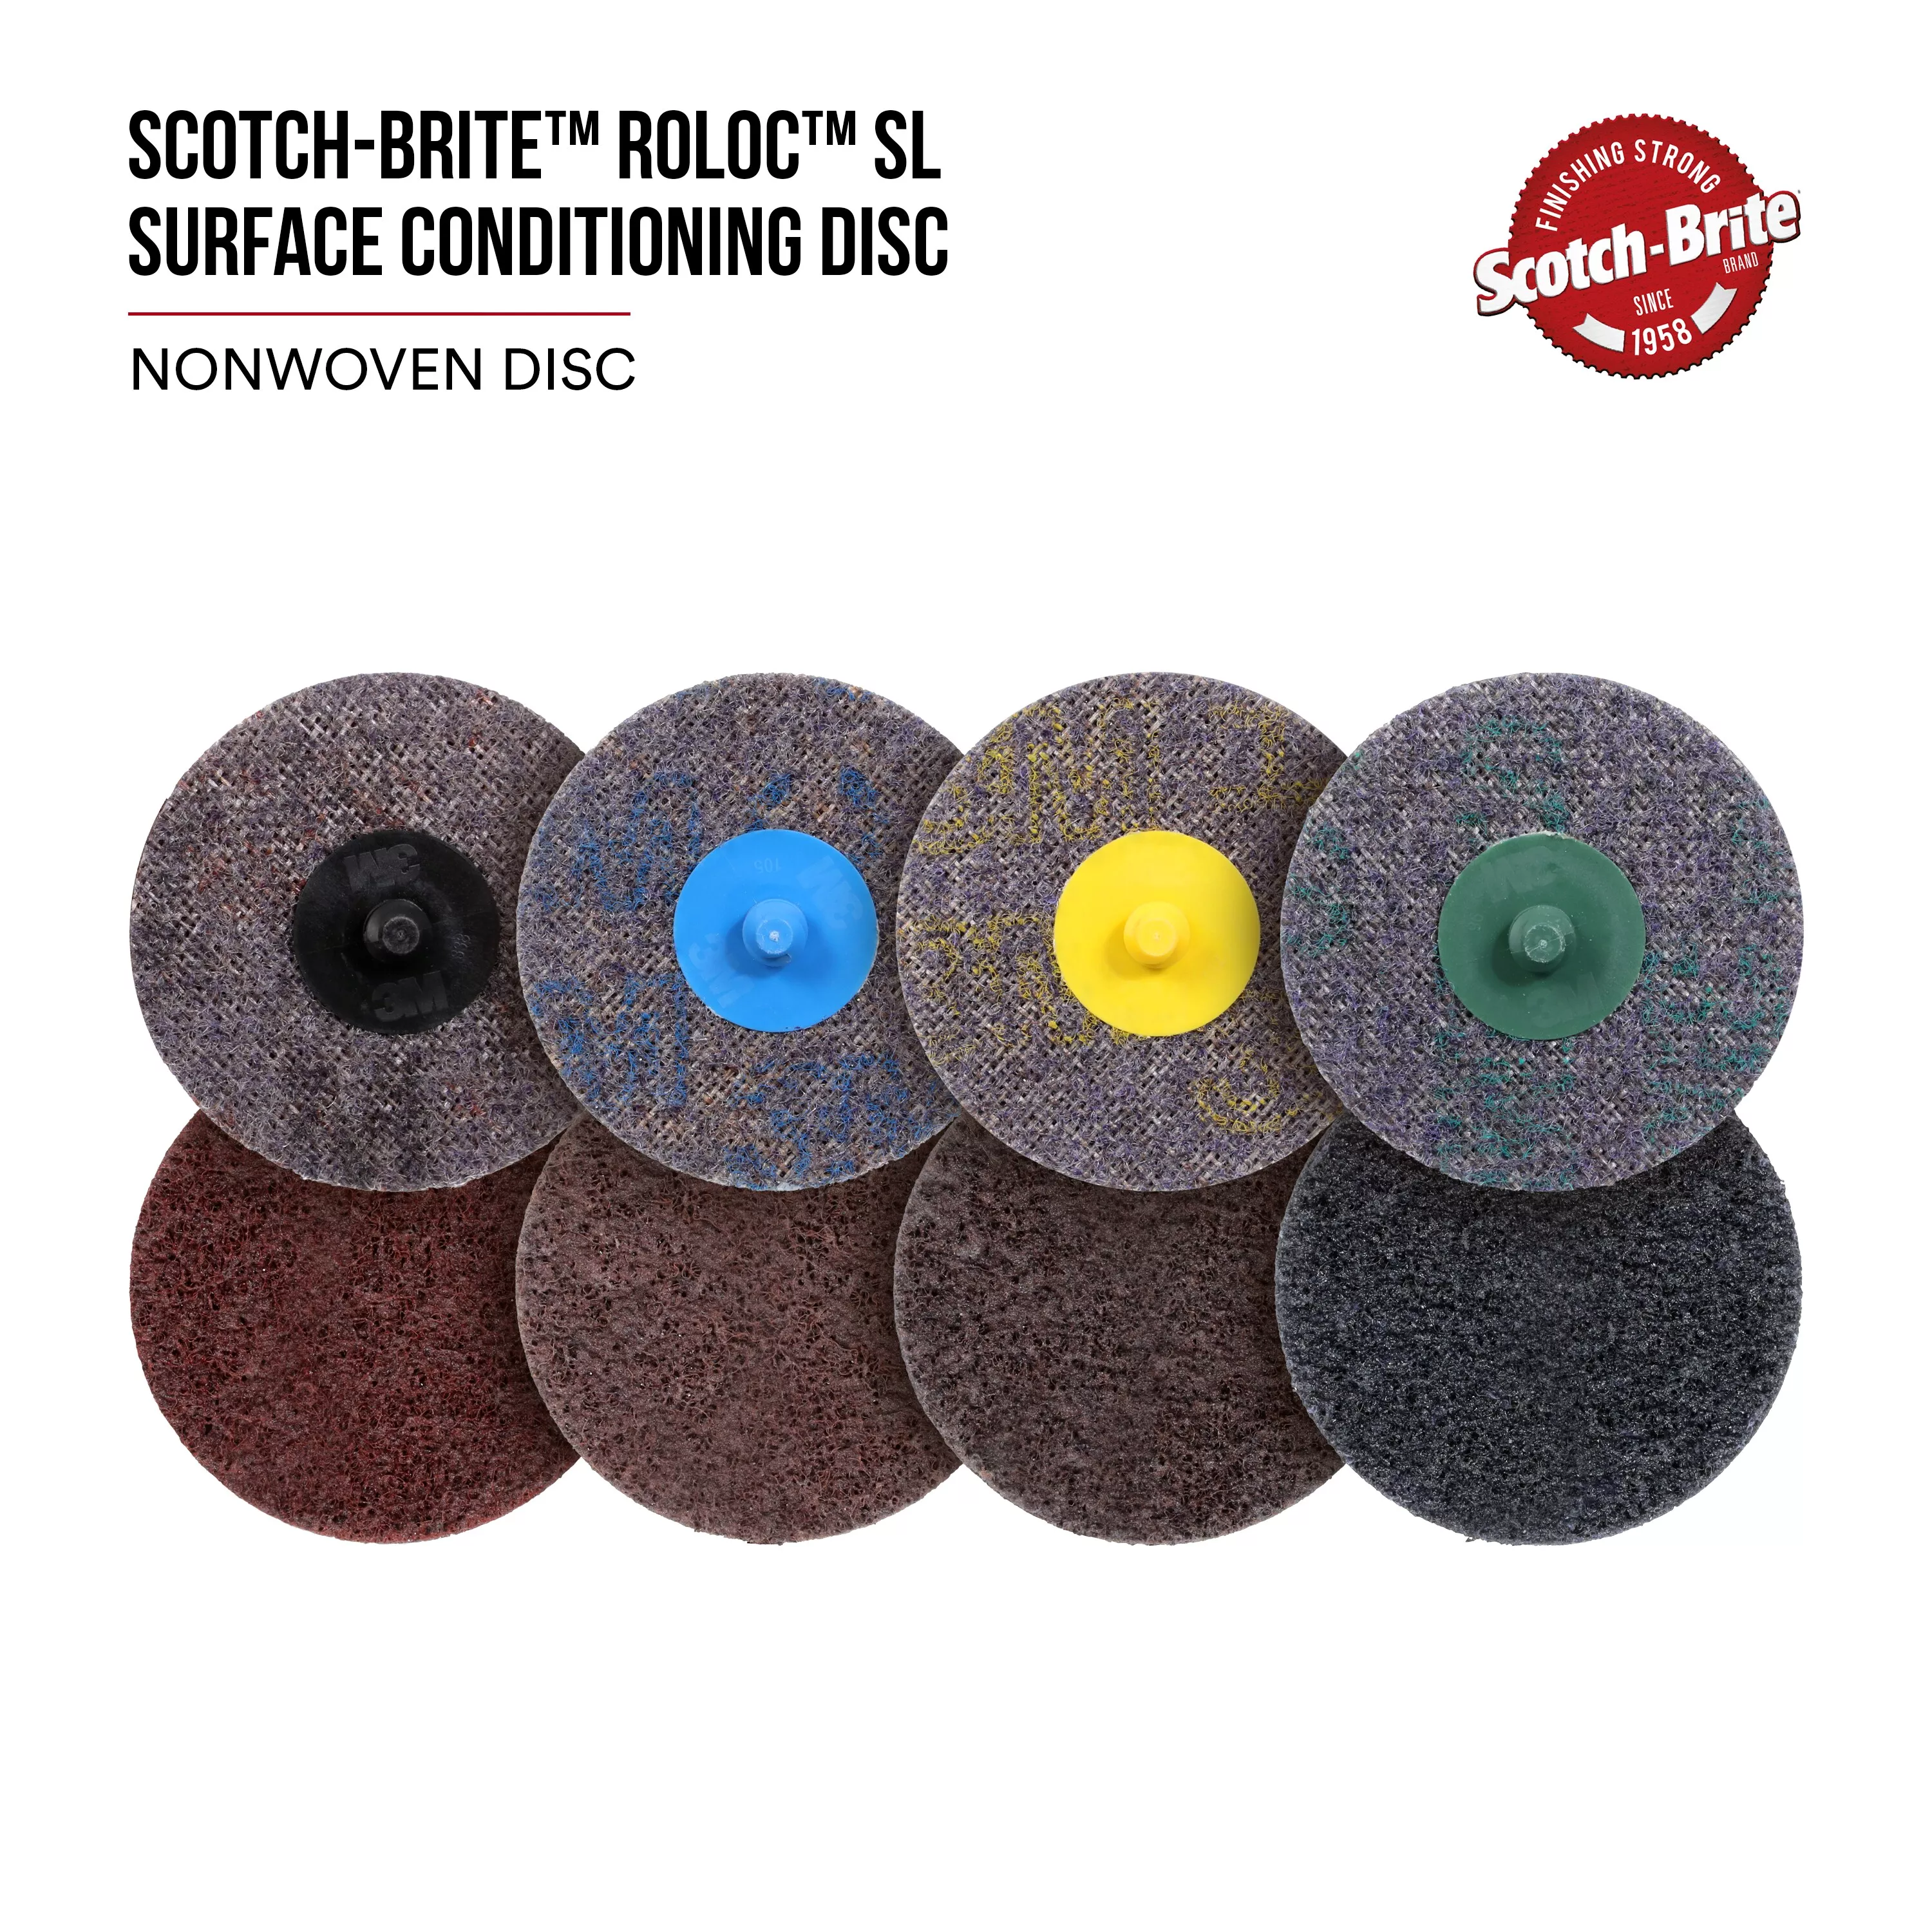 SKU 7000046218 | Scotch-Brite™ Roloc™ SL Surface Conditioning Disc